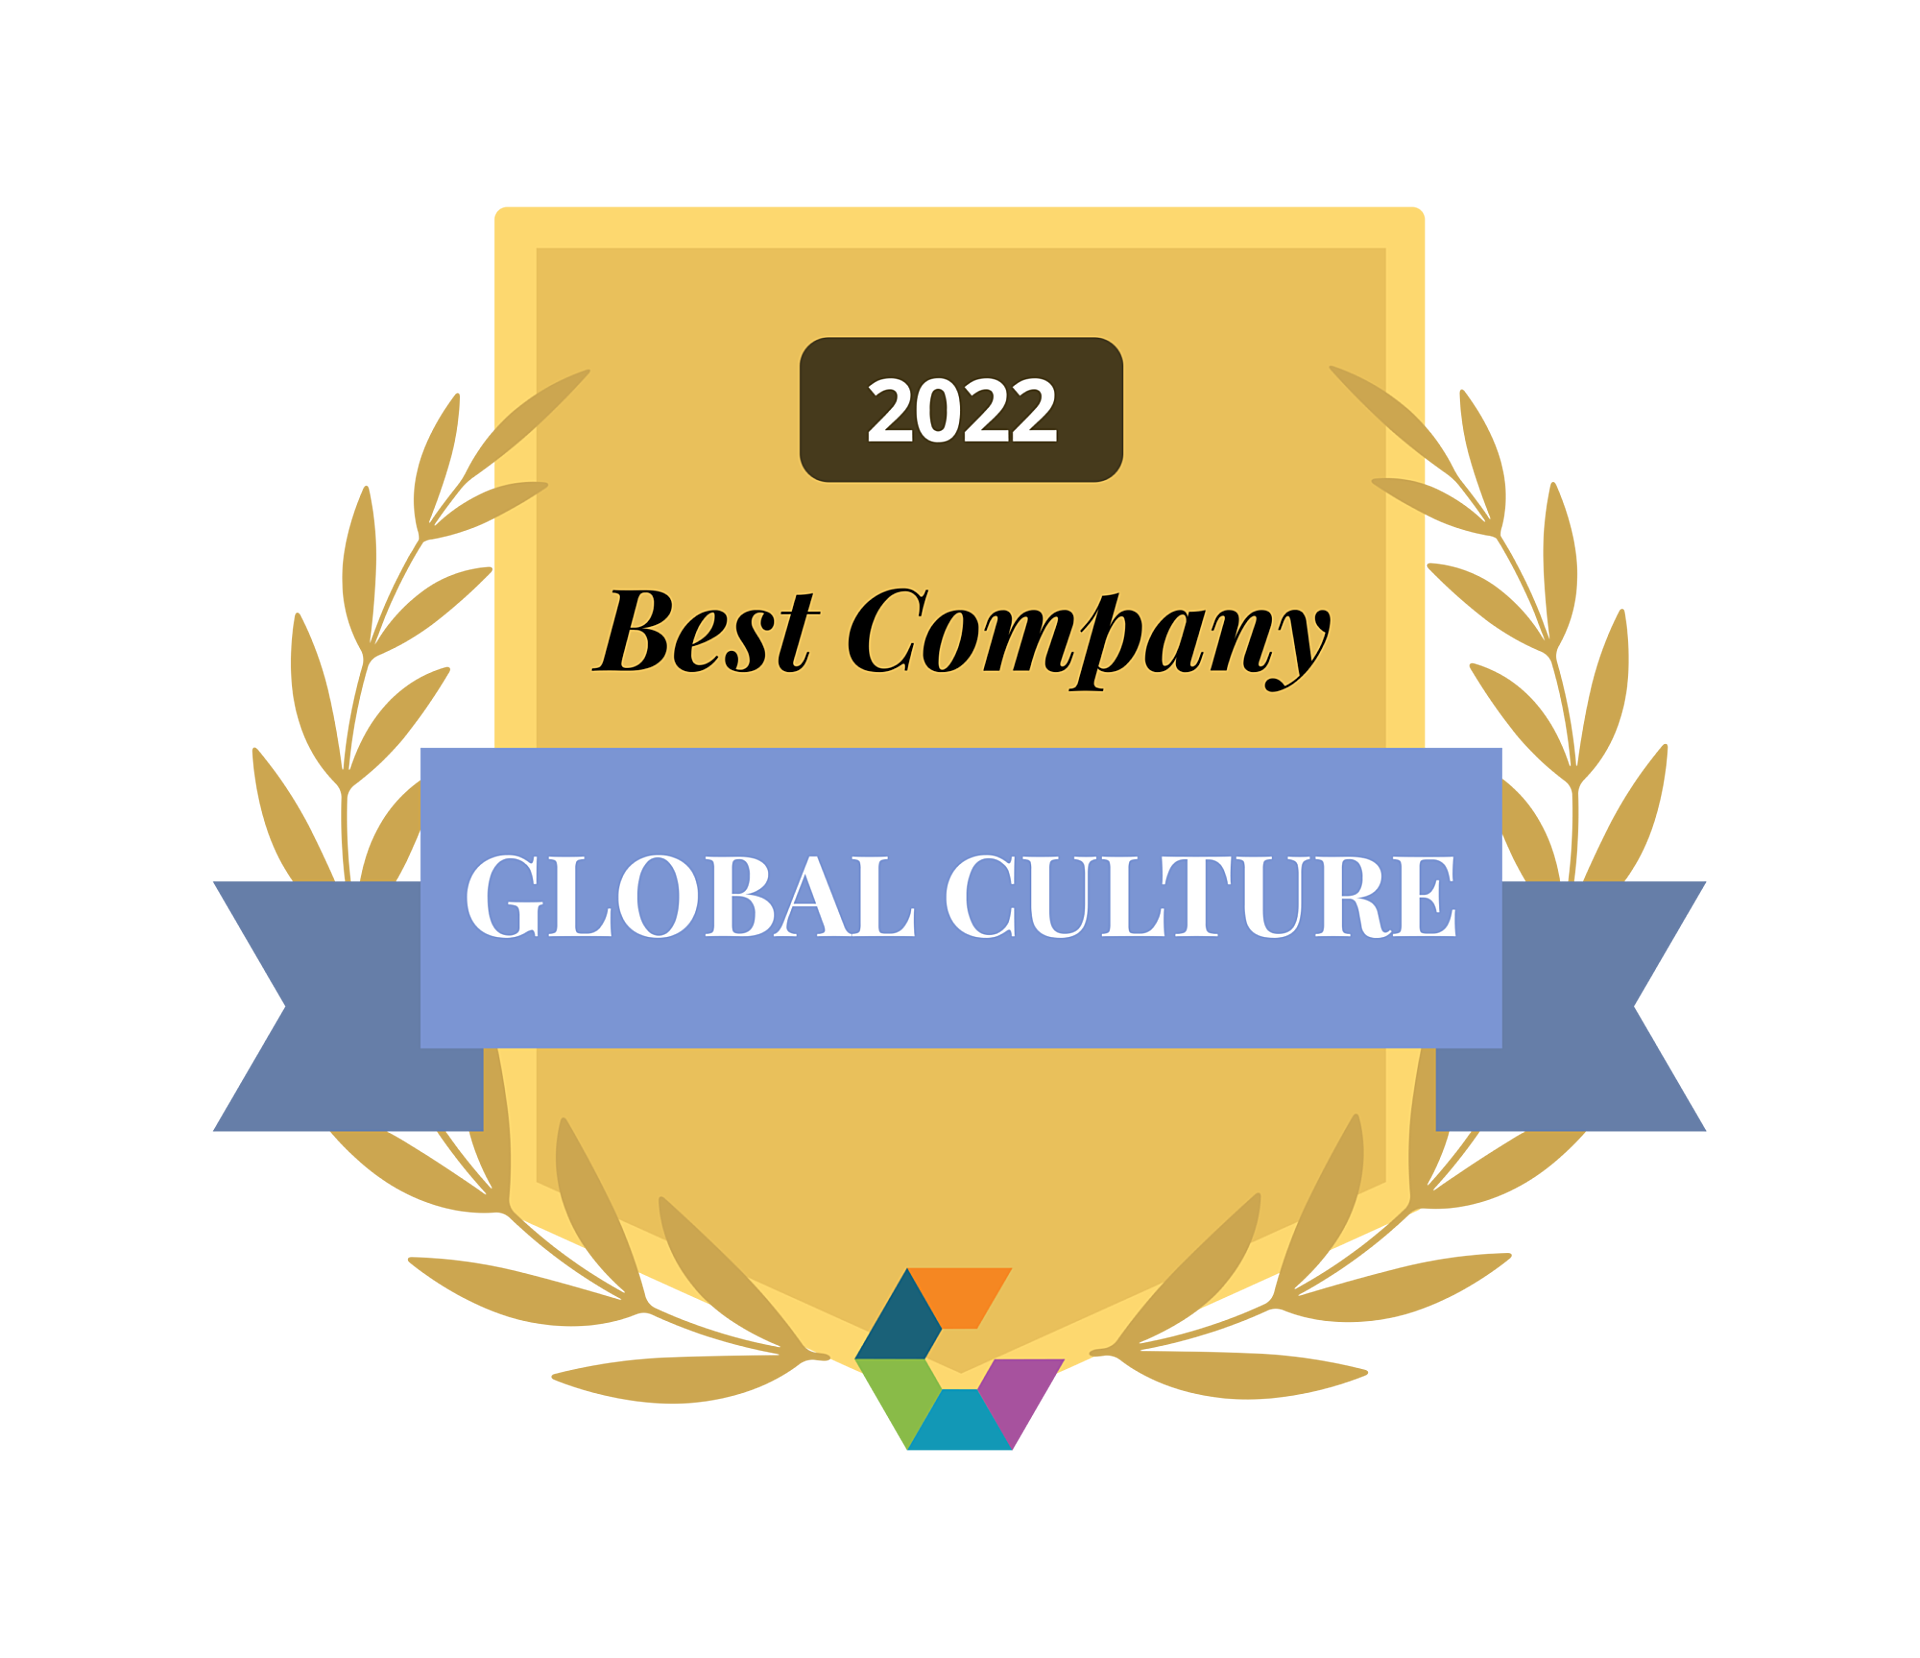 Mejor cultura global empresarial en 2022